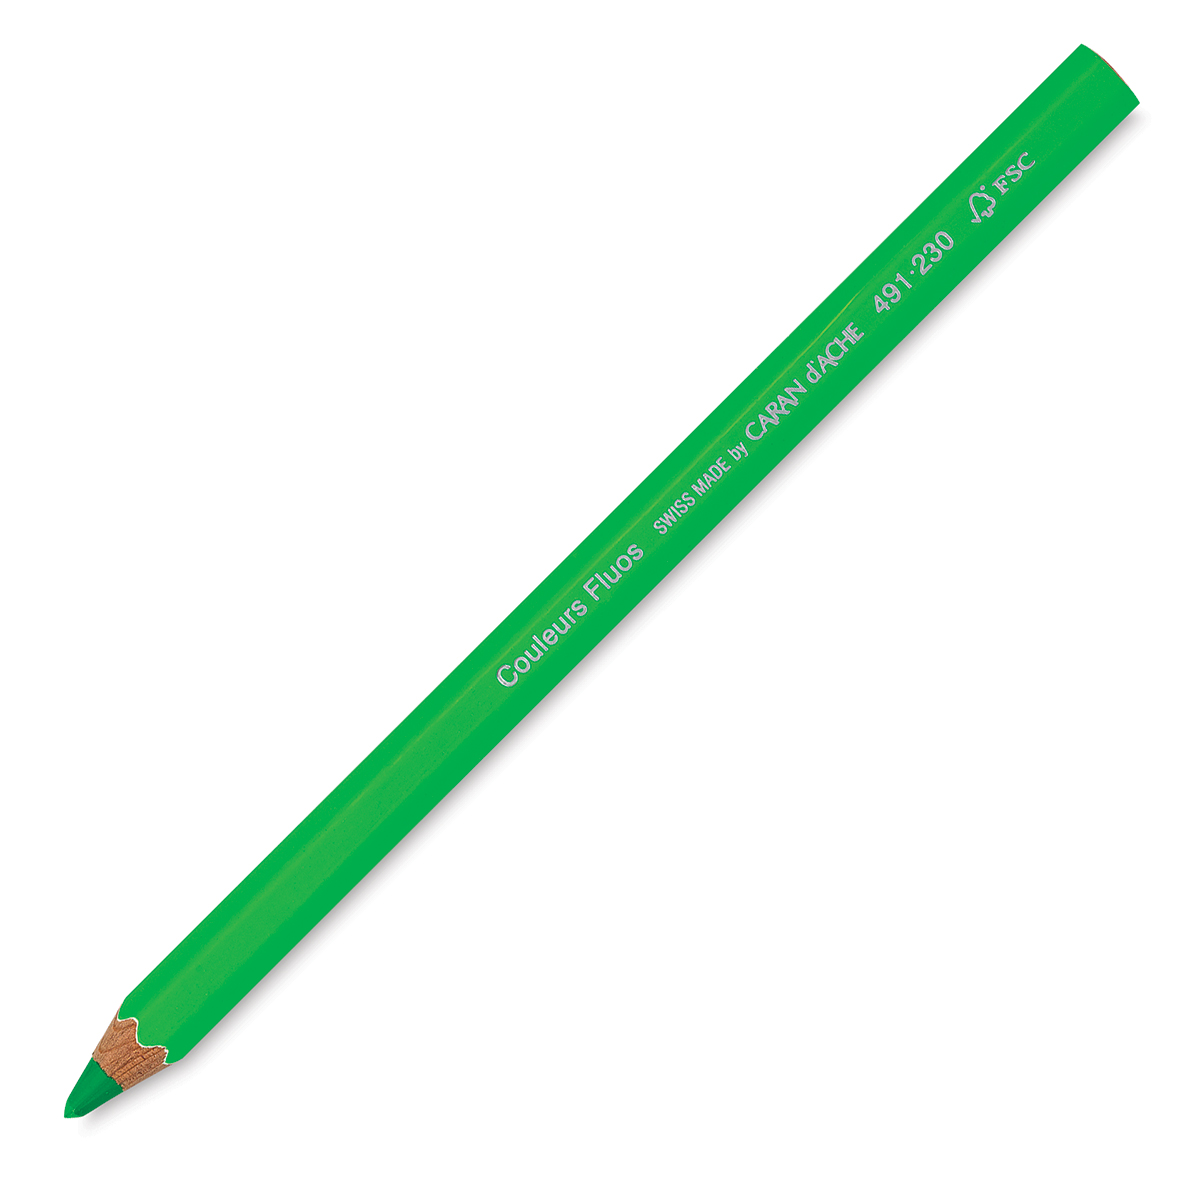 Jumbo Fluorescent Pencil Highlighters, Caran d'Ache – Penny Post